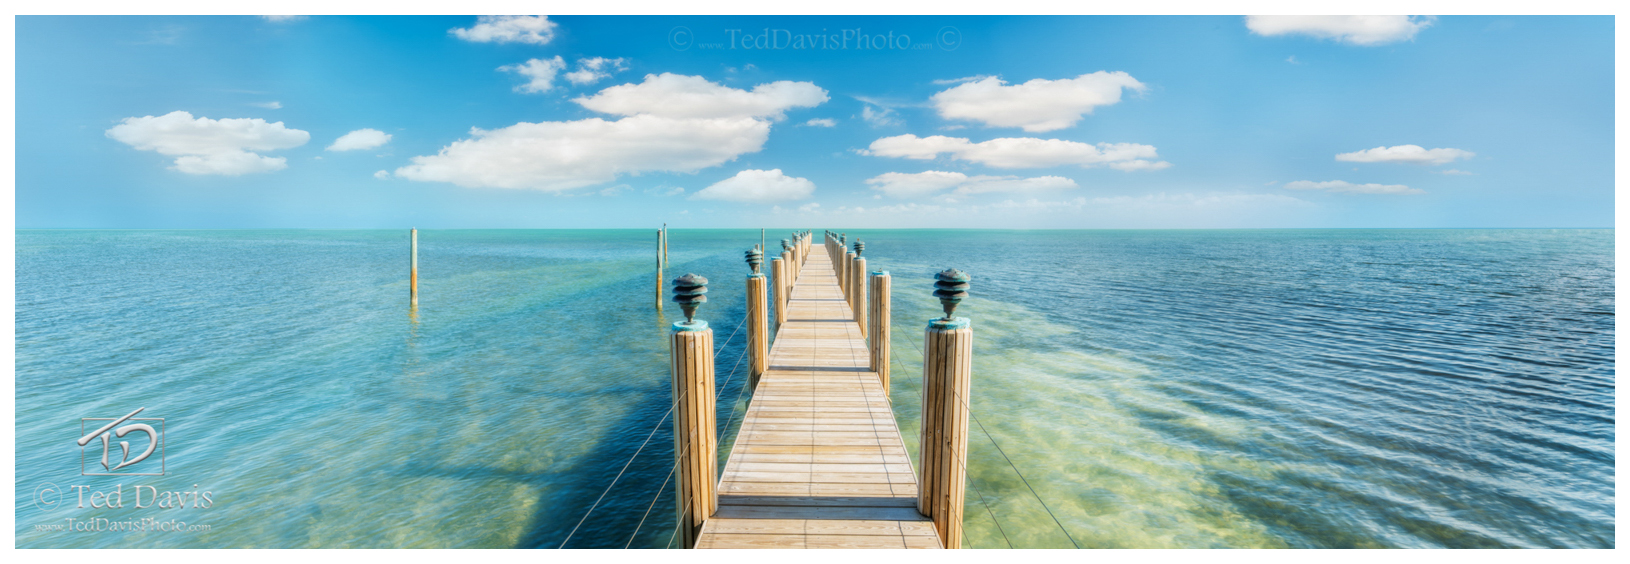 florida, keys, serenity, turquoise, water, jetty, boat, sun, water, docks, boats, maine, sky, clouds, beauty